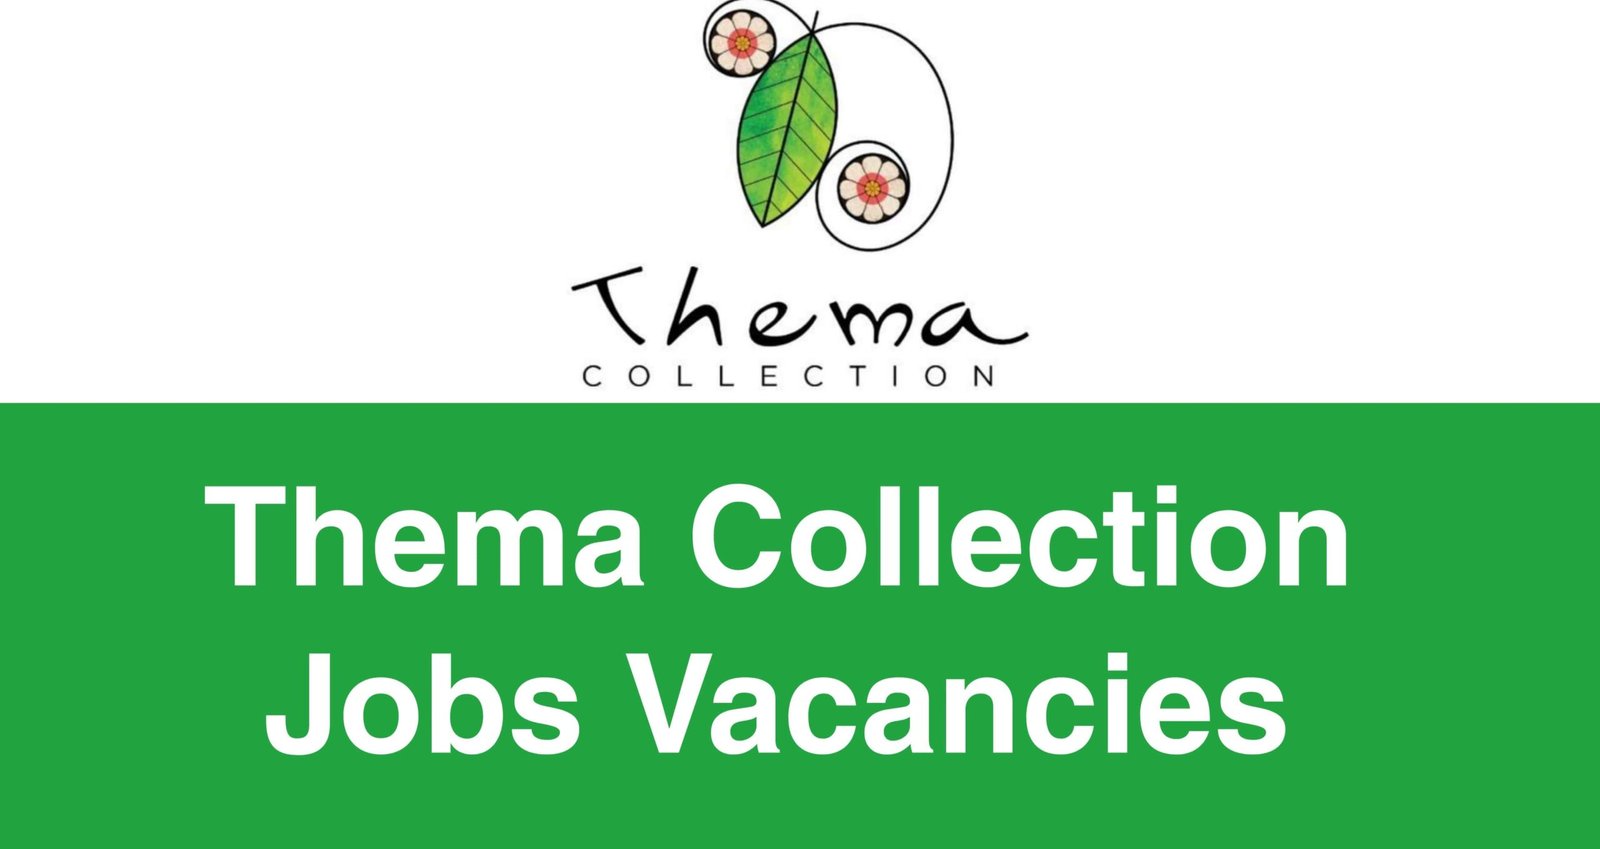 Thema Collection Jobs Vacancies